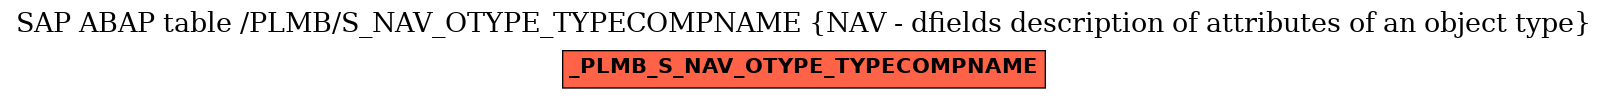 E-R Diagram for table /PLMB/S_NAV_OTYPE_TYPECOMPNAME (NAV - dfields description of attributes of an object type)